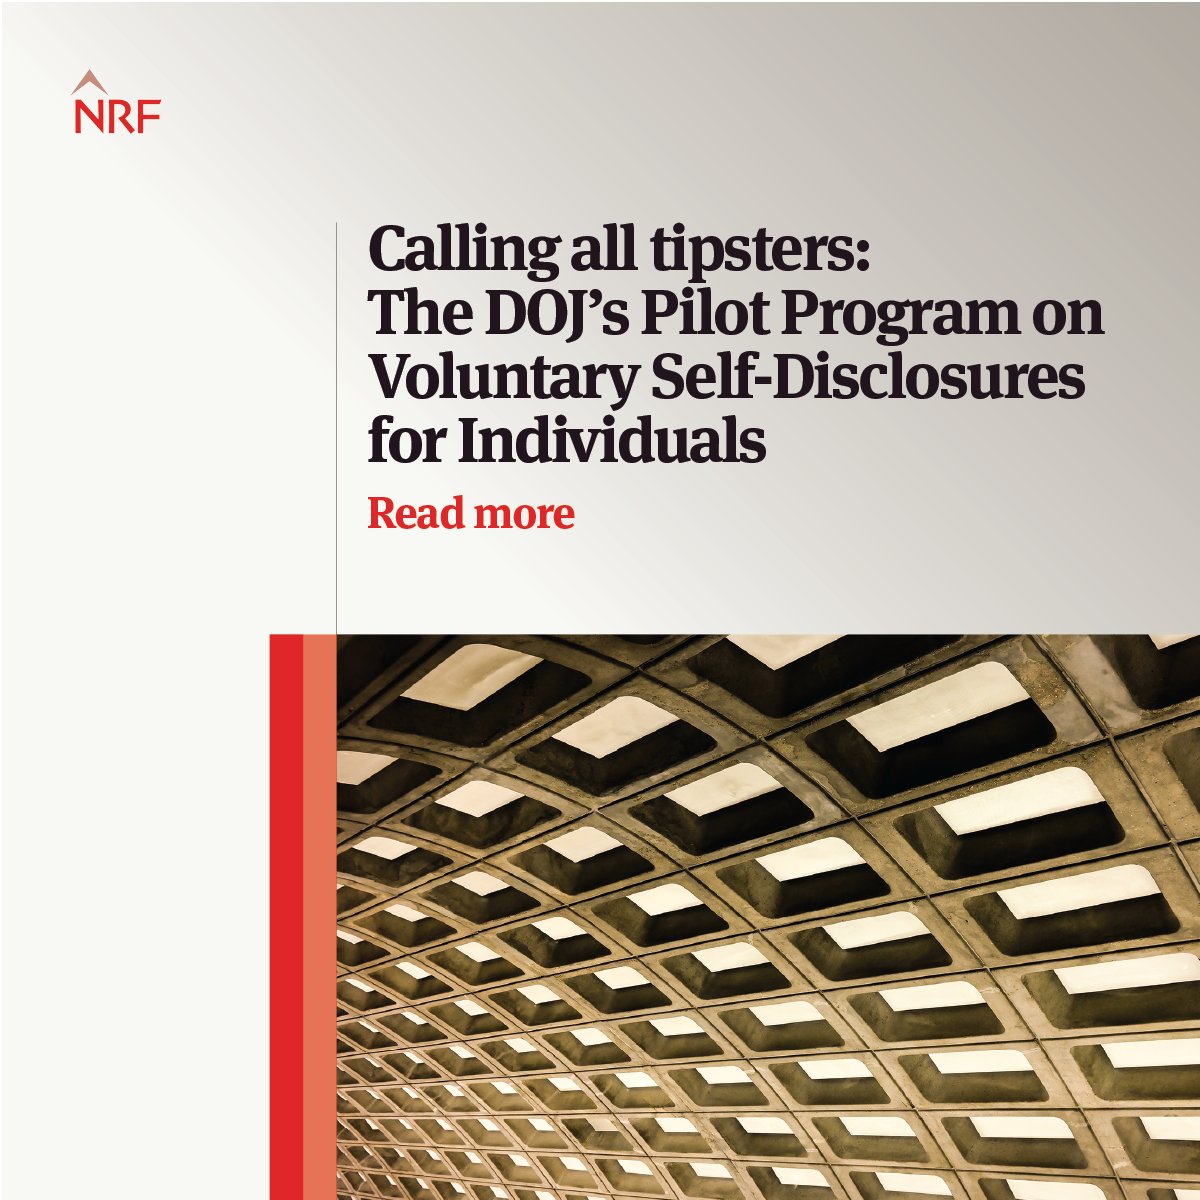 Kevin Harnisch, Sandeep Savla, Mayling Blanco, Brian Sun and Katey Fardelmann examine the DOJ’s Pilot Program on Voluntary Self-Disclosures for Individuals. ow.ly/GjNm50Rlxpf